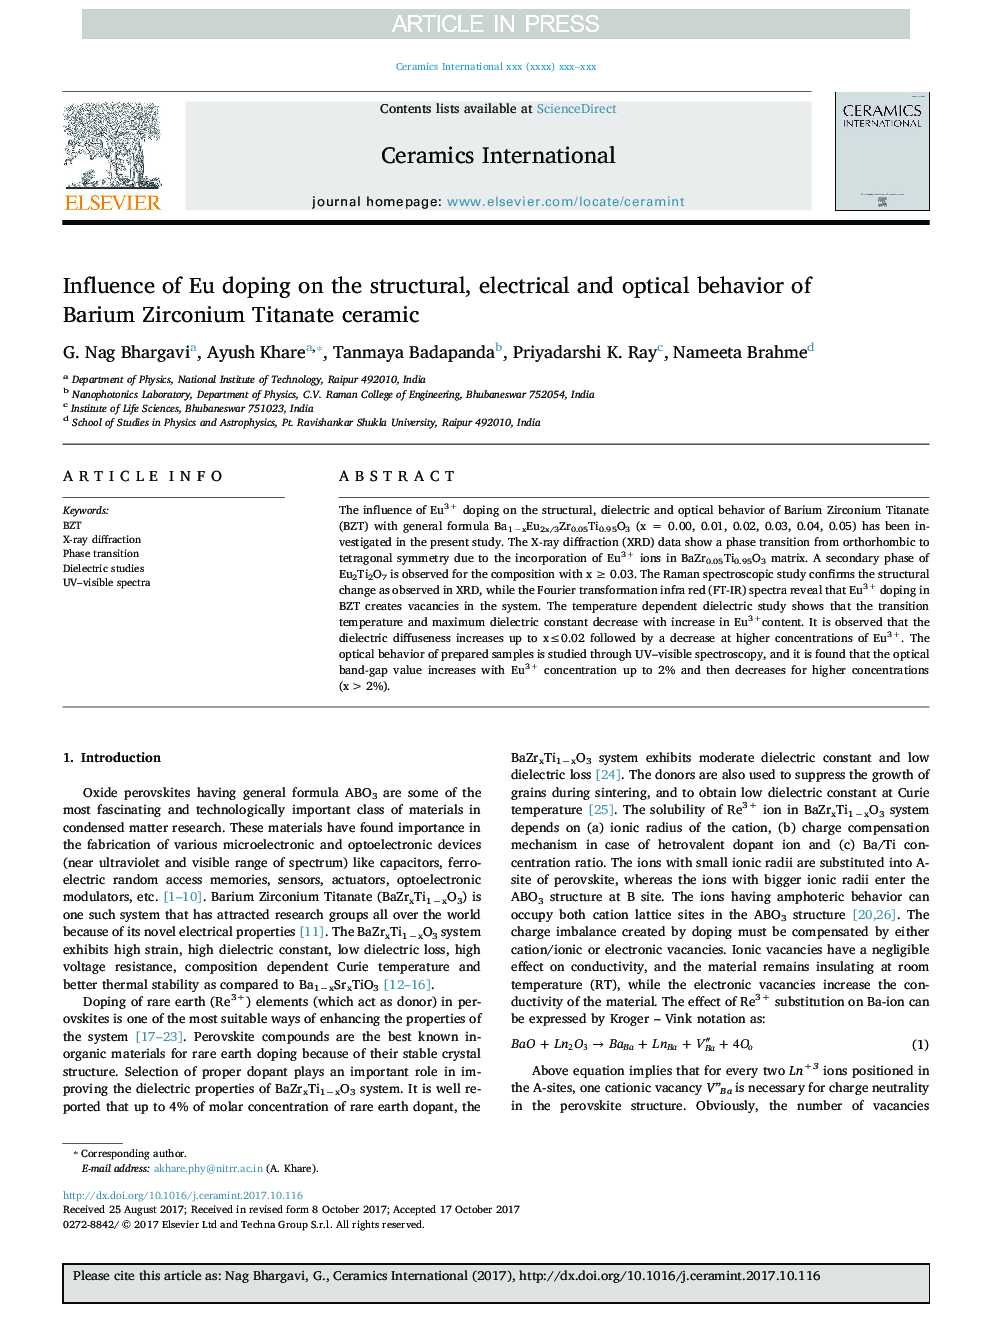 Influence of Eu doping on the structural, electrical and optical behavior of Barium Zirconium Titanate ceramic